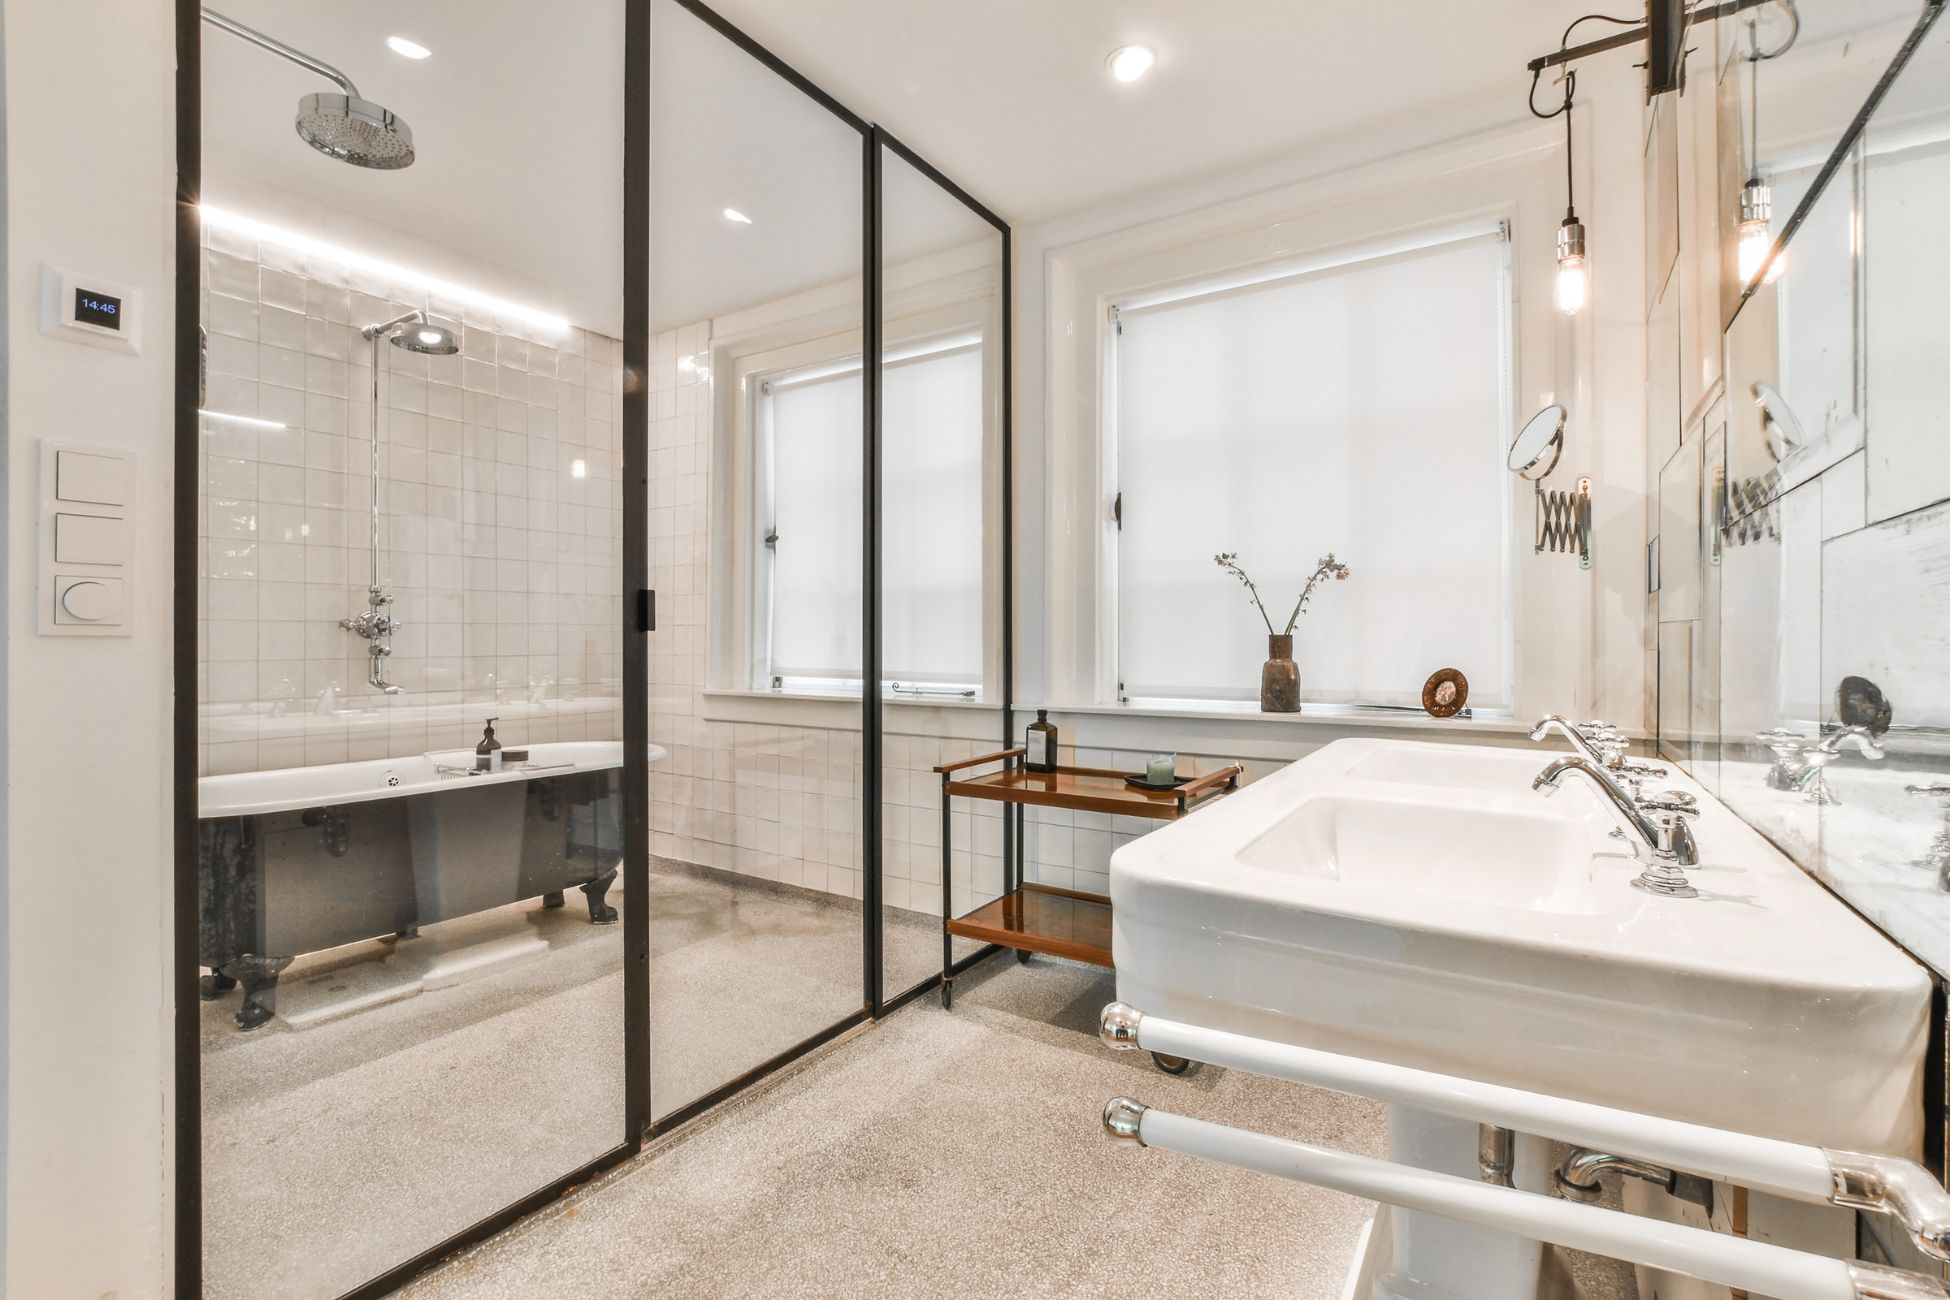 Spacious bathroom with tub-shower combination